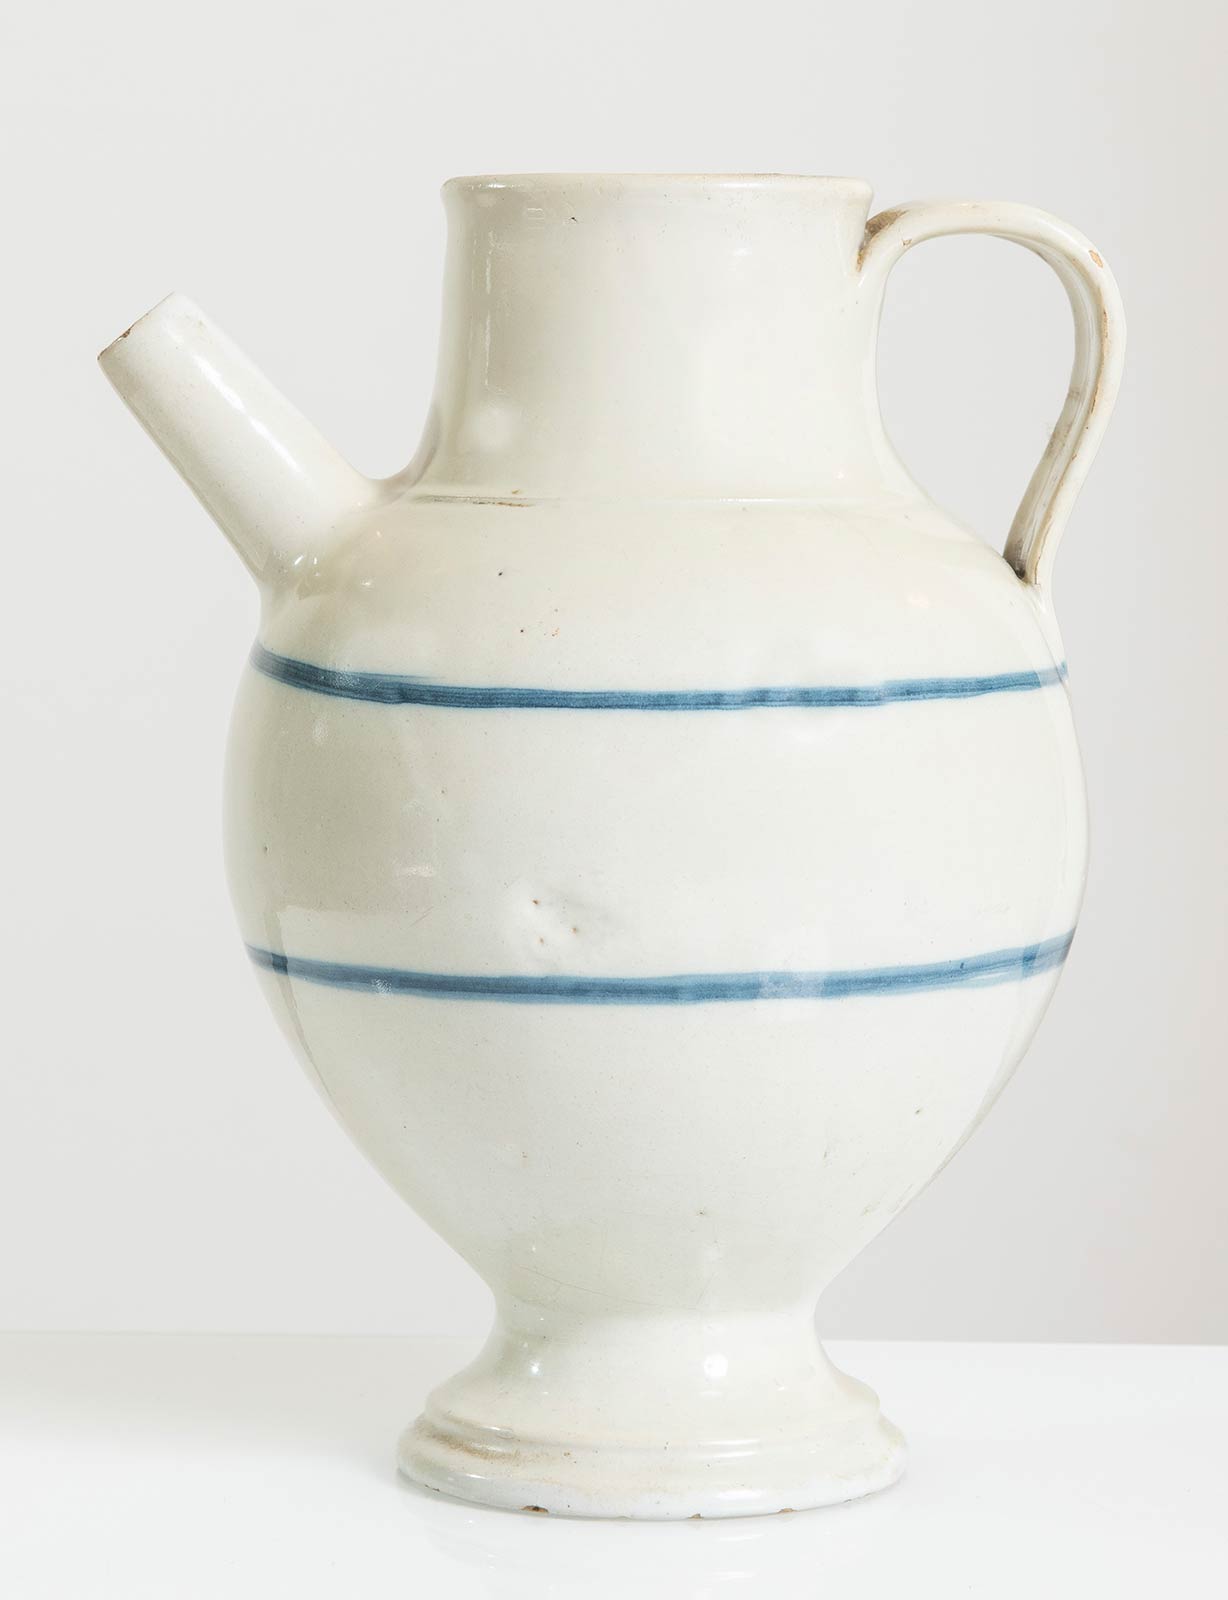 Versatoio da farmacia in ceramica bianca con decori in blu, XIX sec. - Image 2 of 3